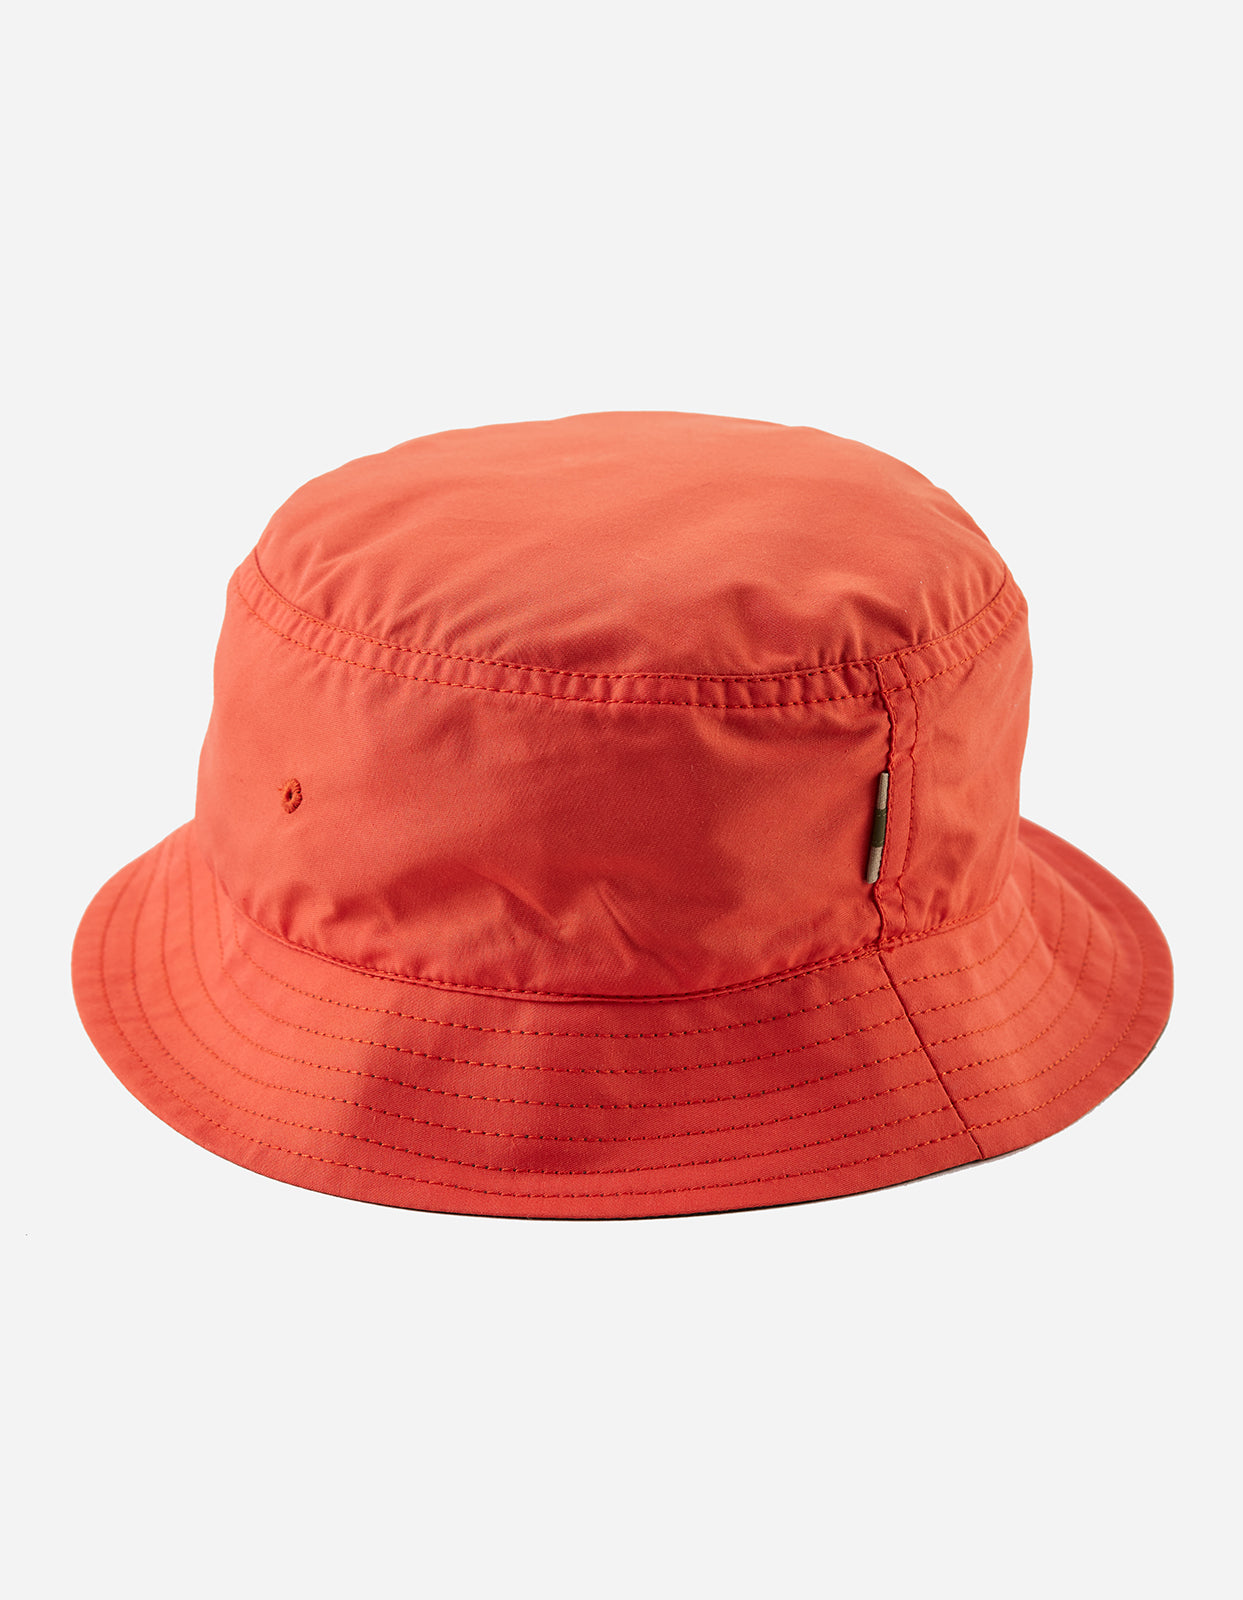 Maharishi | Reversible Bucket Hat Blaze Orange/Charcoal